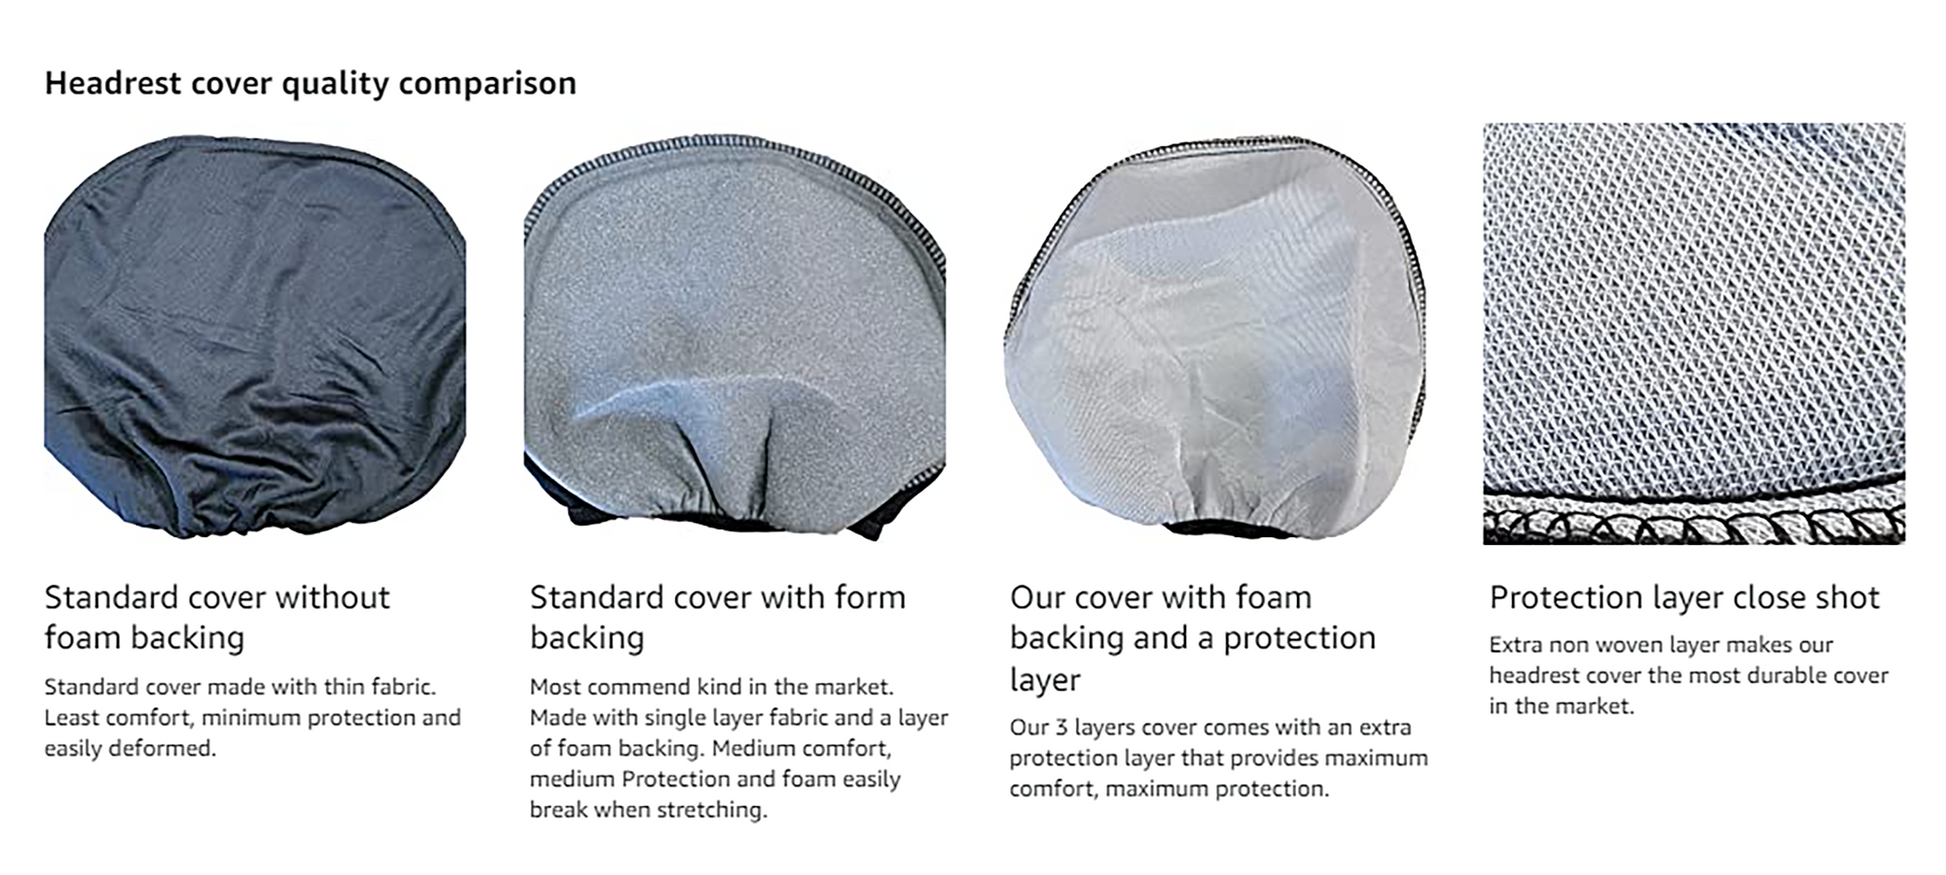 headrest cover quality comparison chart